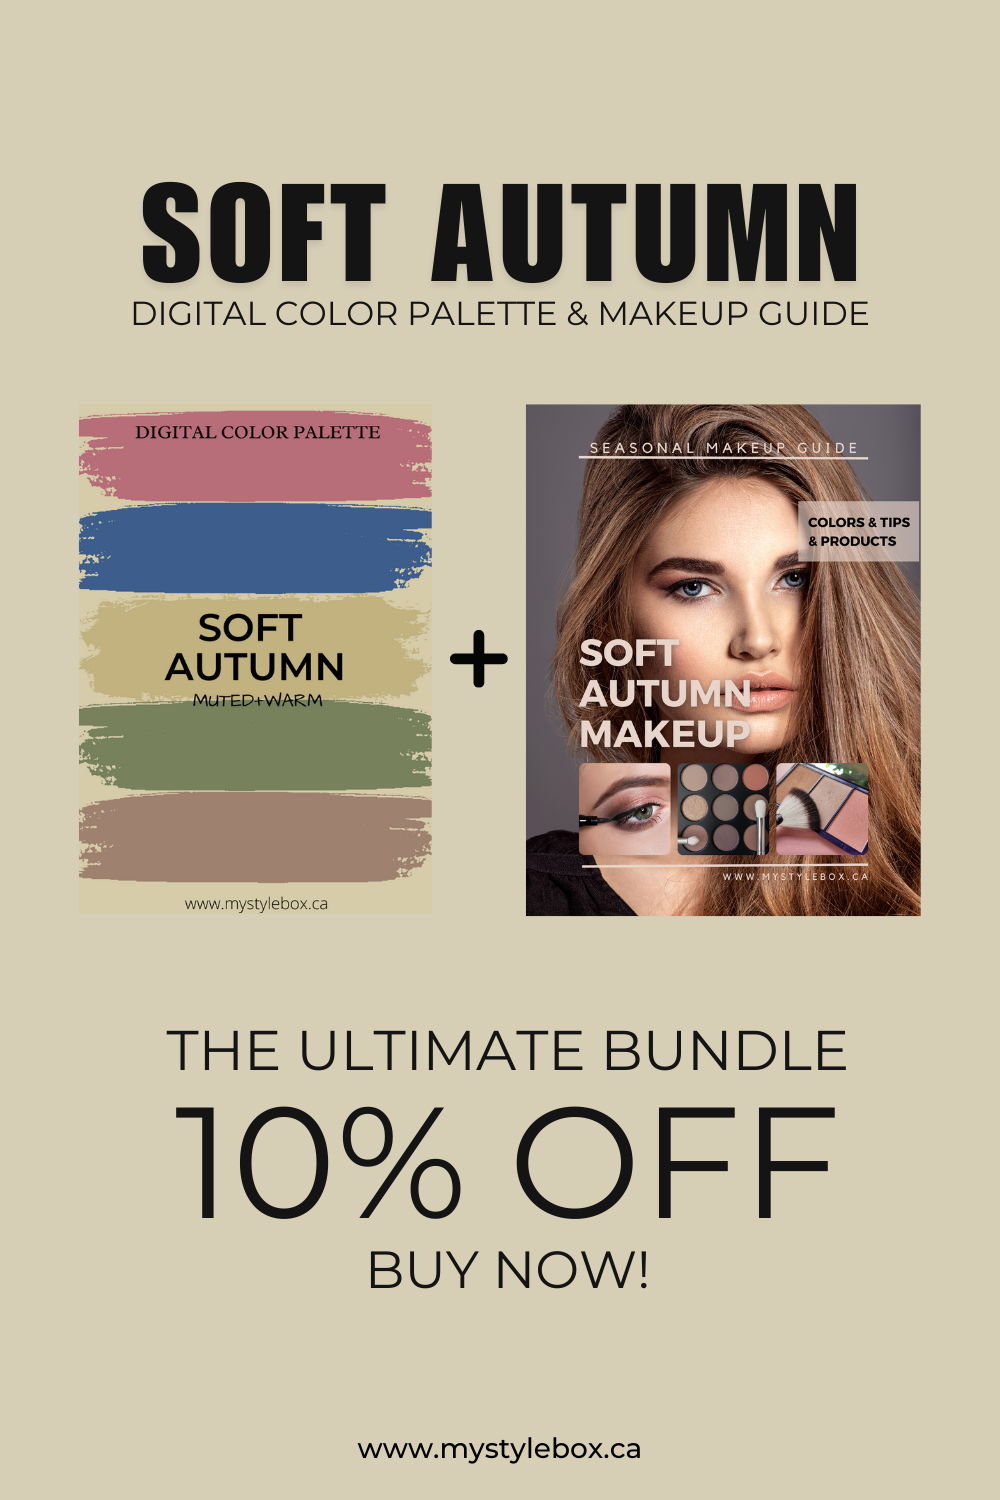 Soft Autumn Digital Color Palette and Makeup Guide